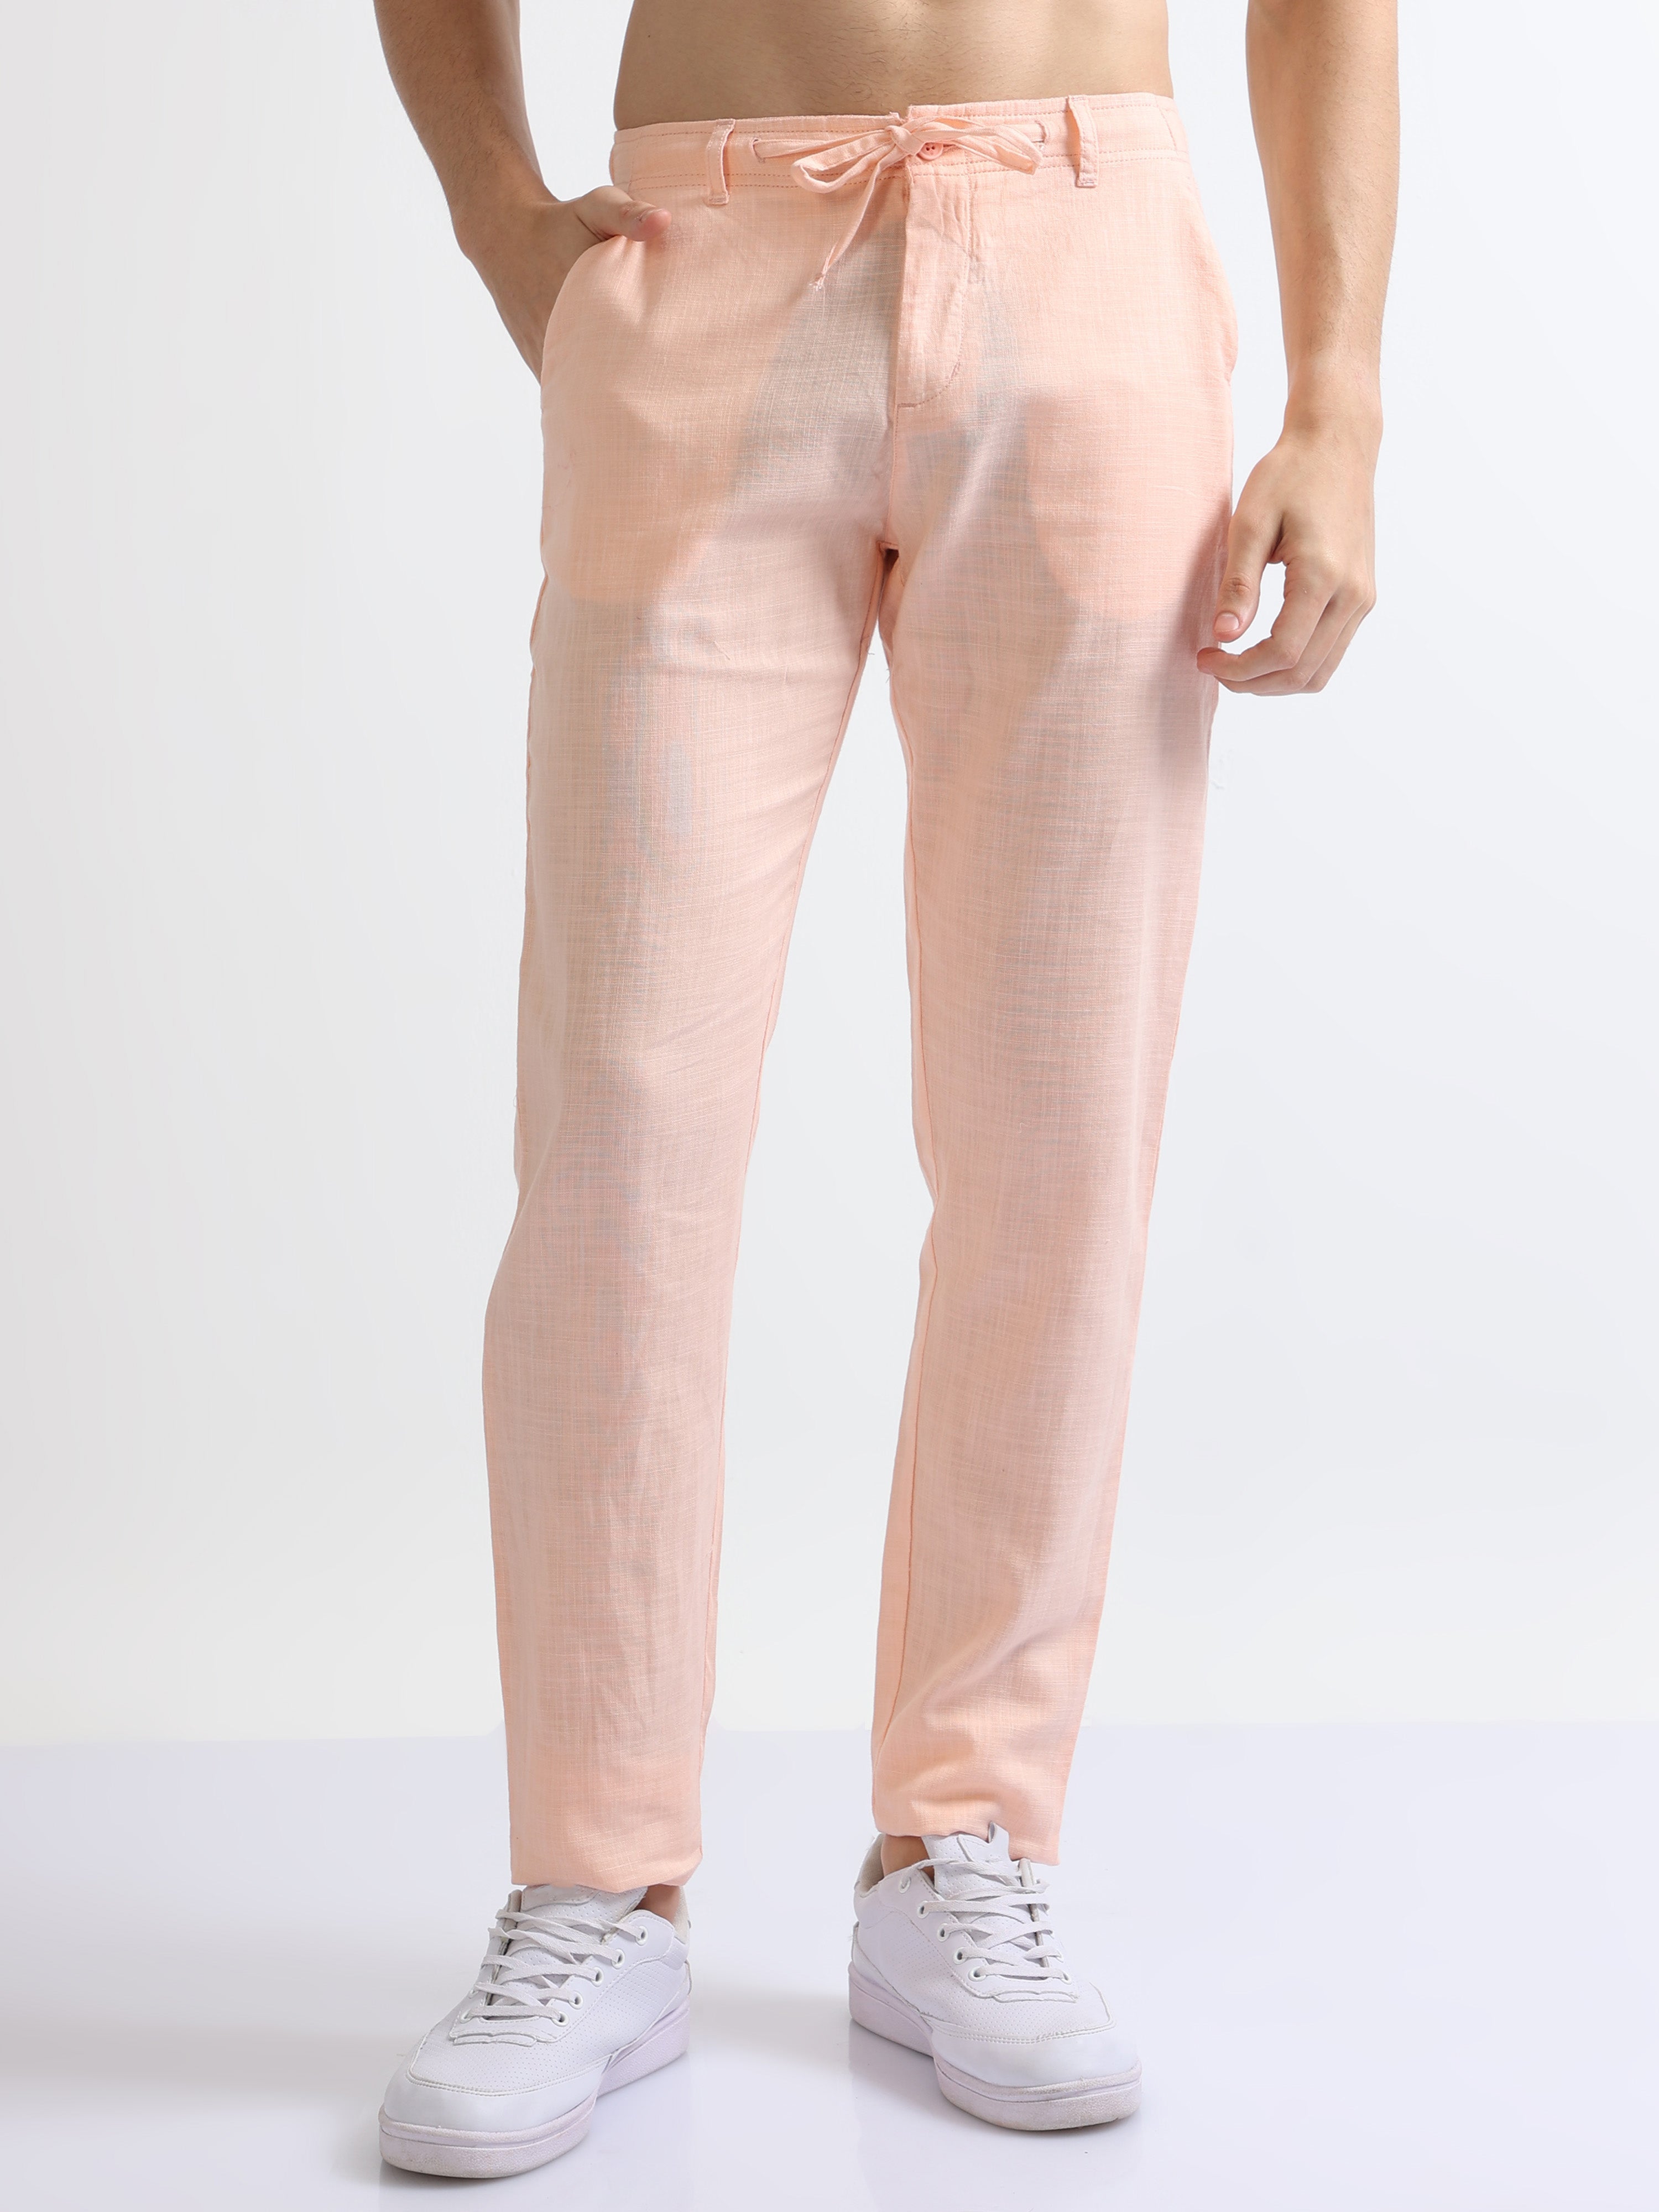 Sweat Pants Cuffys of Cape Cod | Pants, Sweatpants, Clothes design